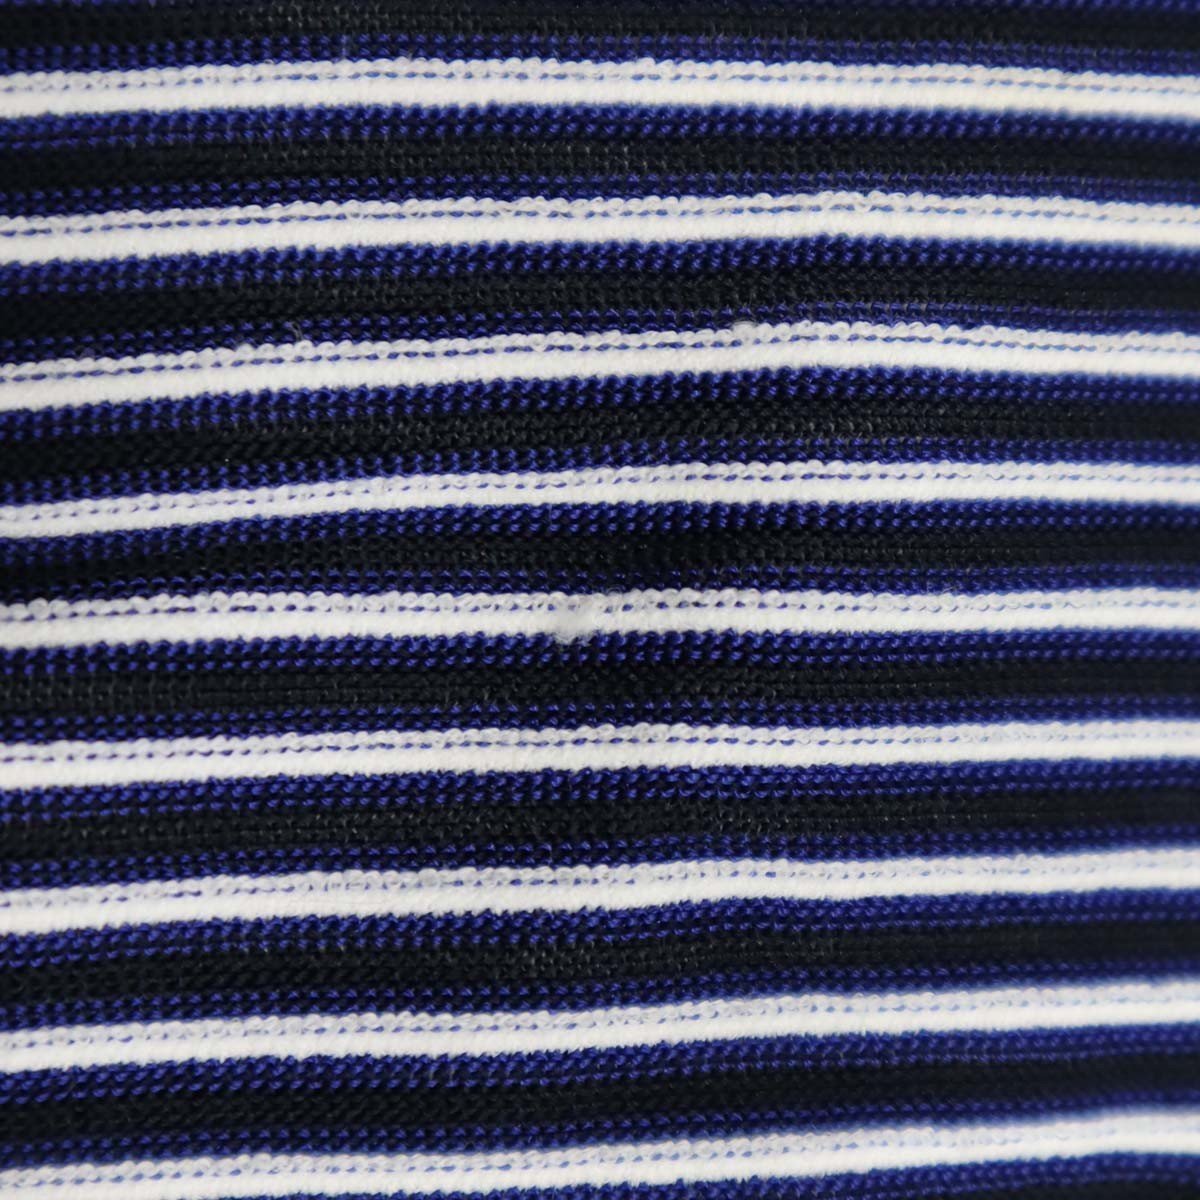  ломбард CHANEL Chanel безрукавка One-piece одежда одежда голубой P48004K06130 размер 36 юбка искусственный шелк H6340... ломбард 